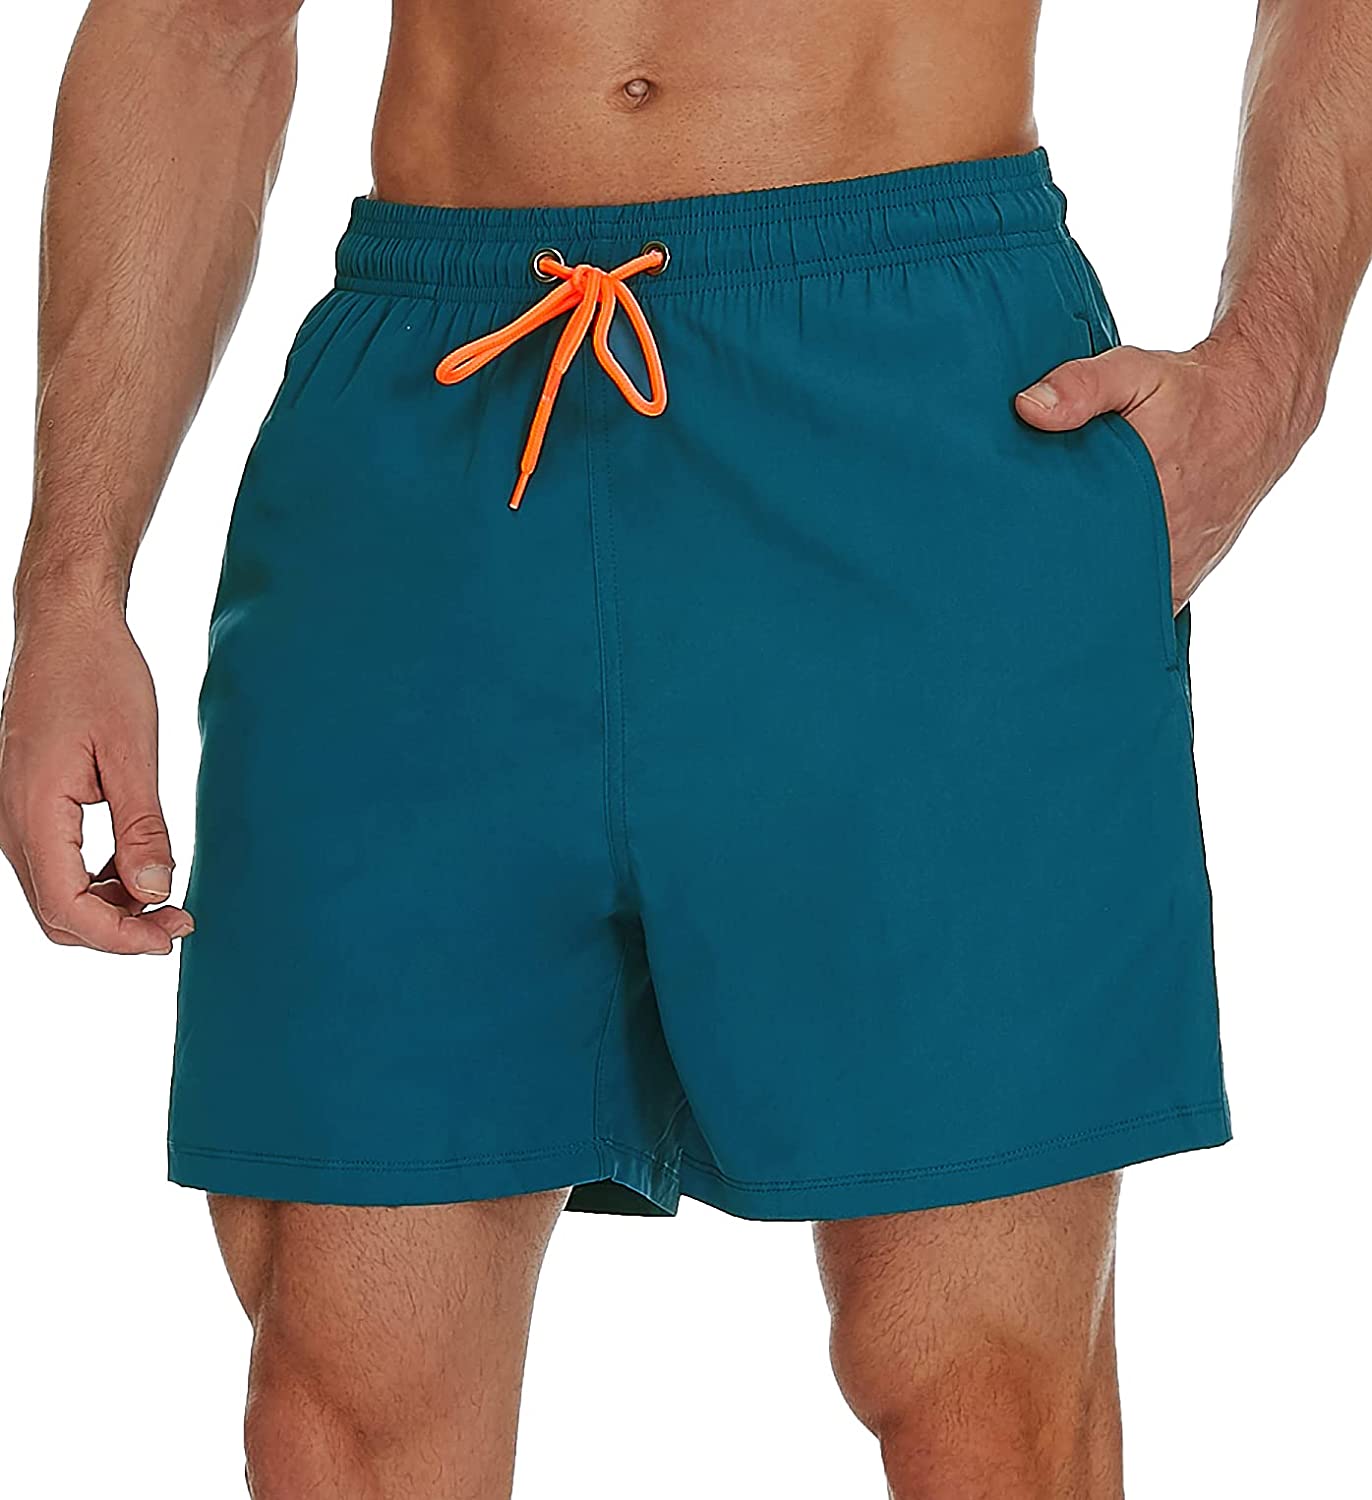 SILKWORLD Men's Swim Trunks with Zipper Pockets 5 Swimsuit Quick Dry Shorts